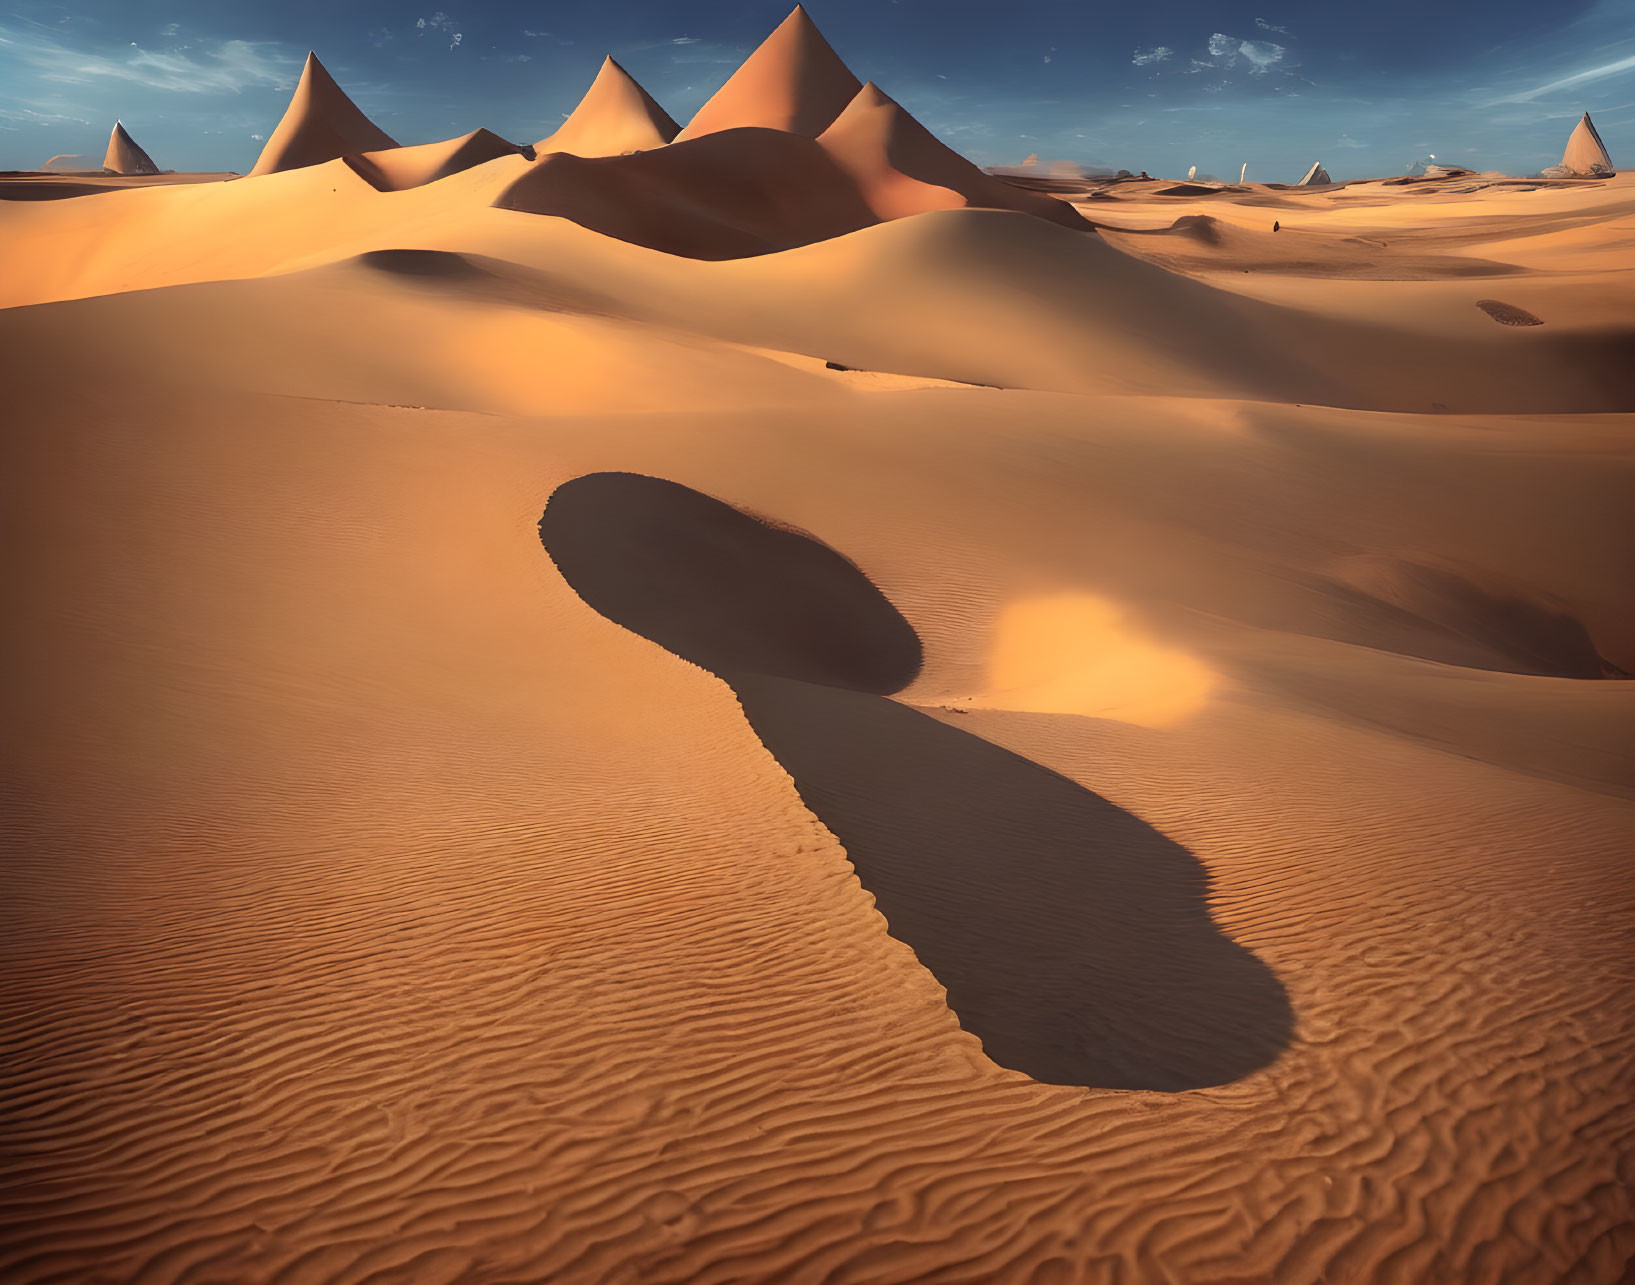 Vast desert landscape with warm sunset hues and rippled sand dunes